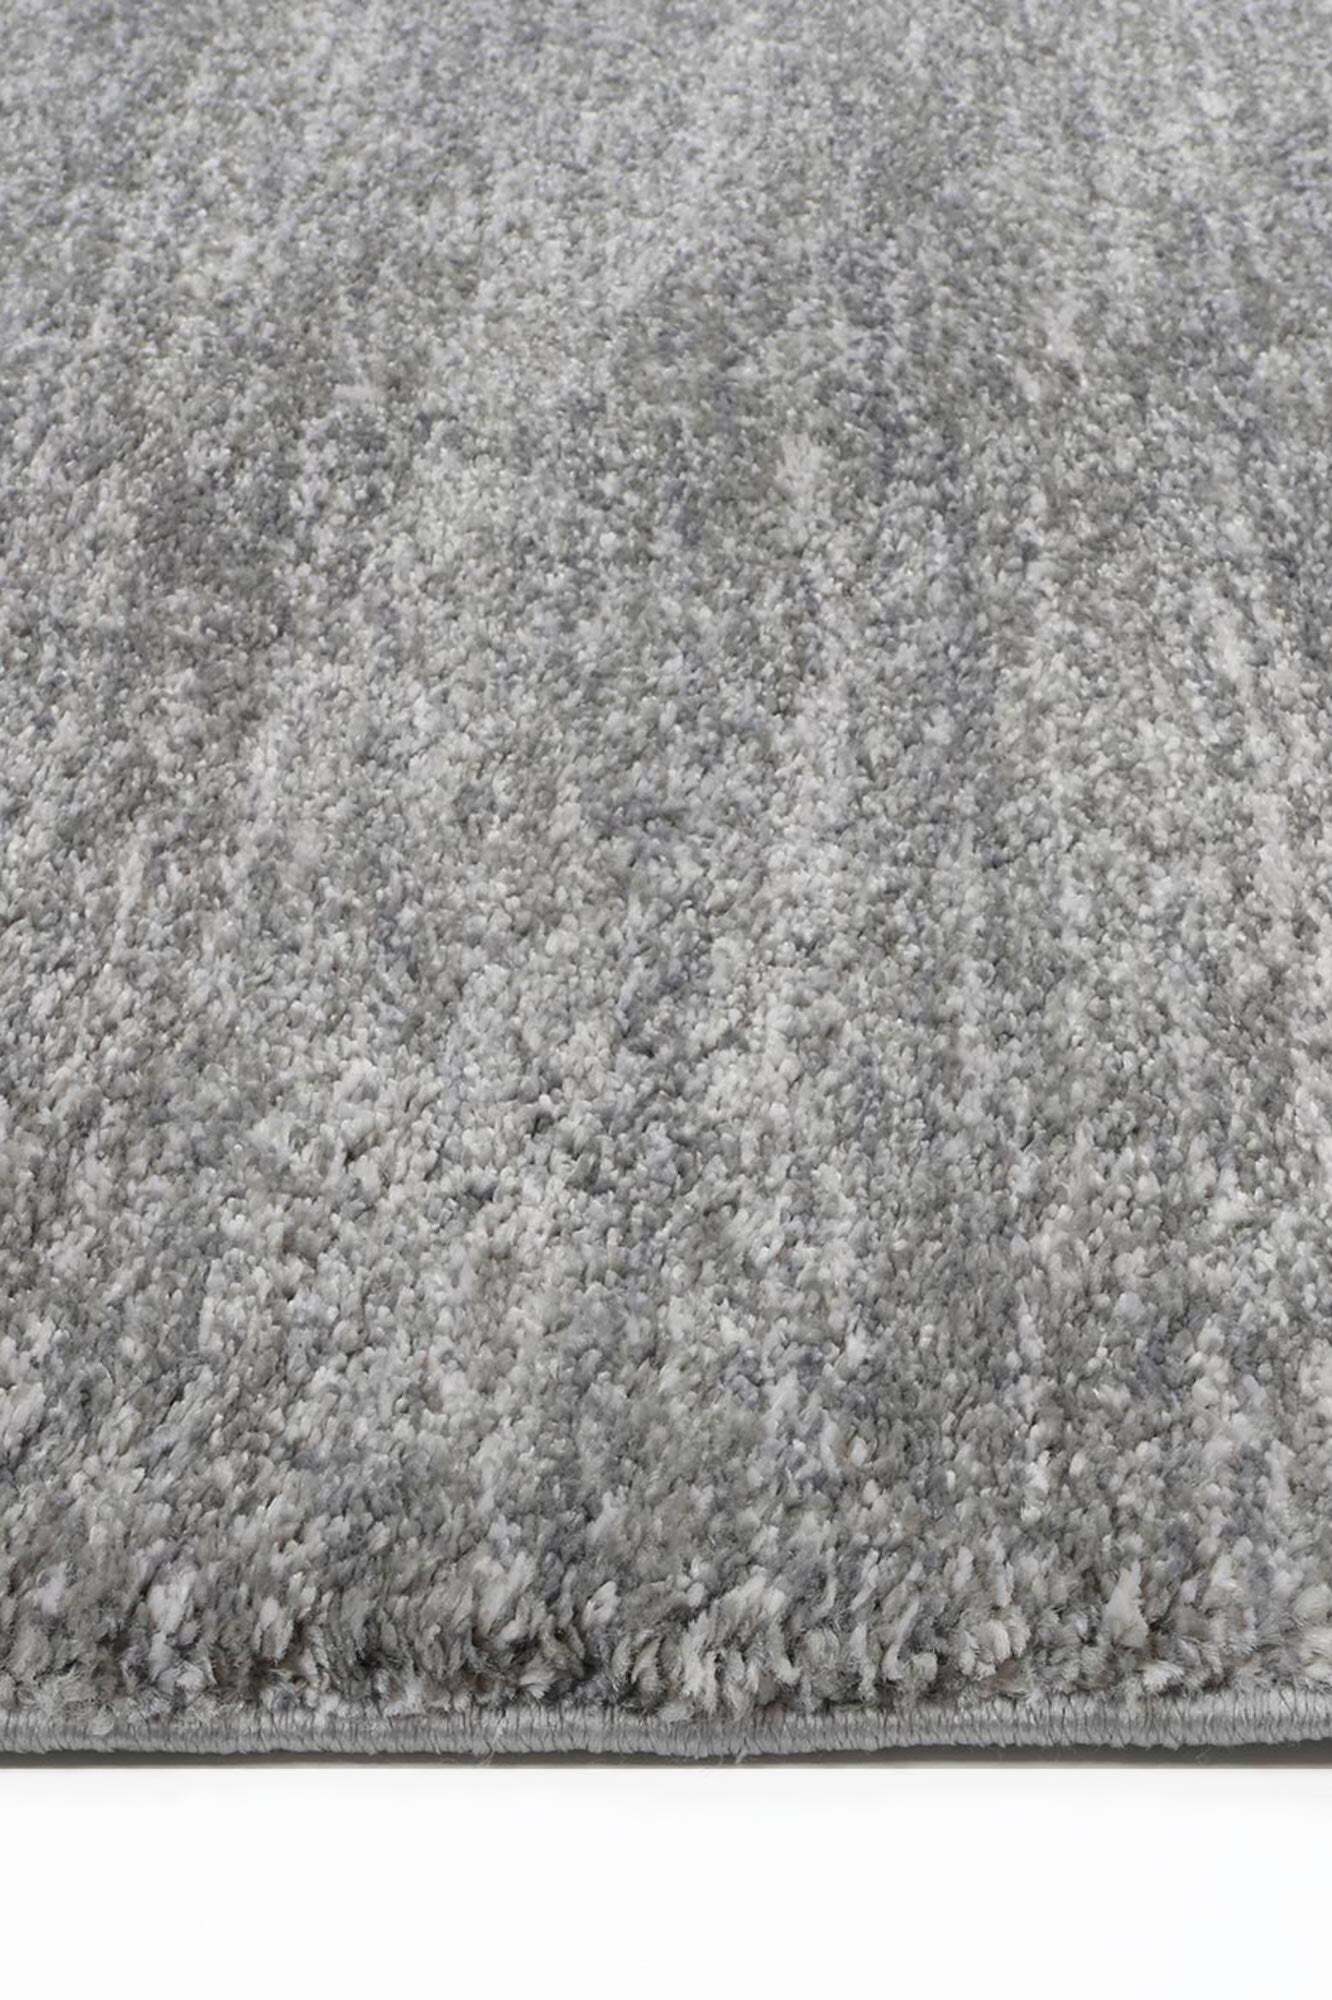 Pave Plain Modern Grey Rug